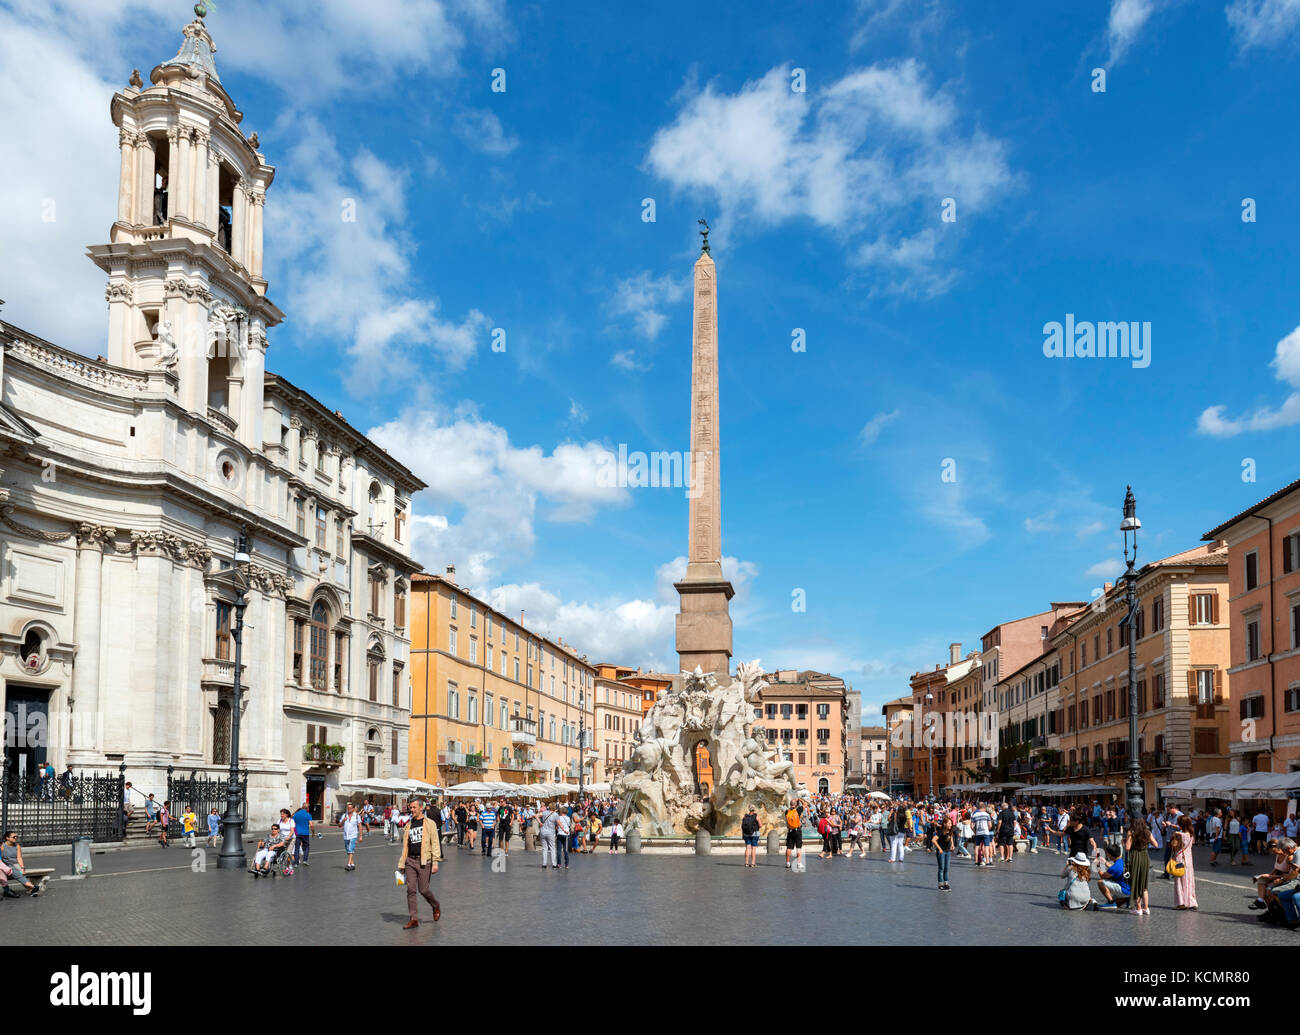 Piazza Navona en regardant vers la Fontana dei Quattro Fiumi, Rome, Italie Banque D'Images